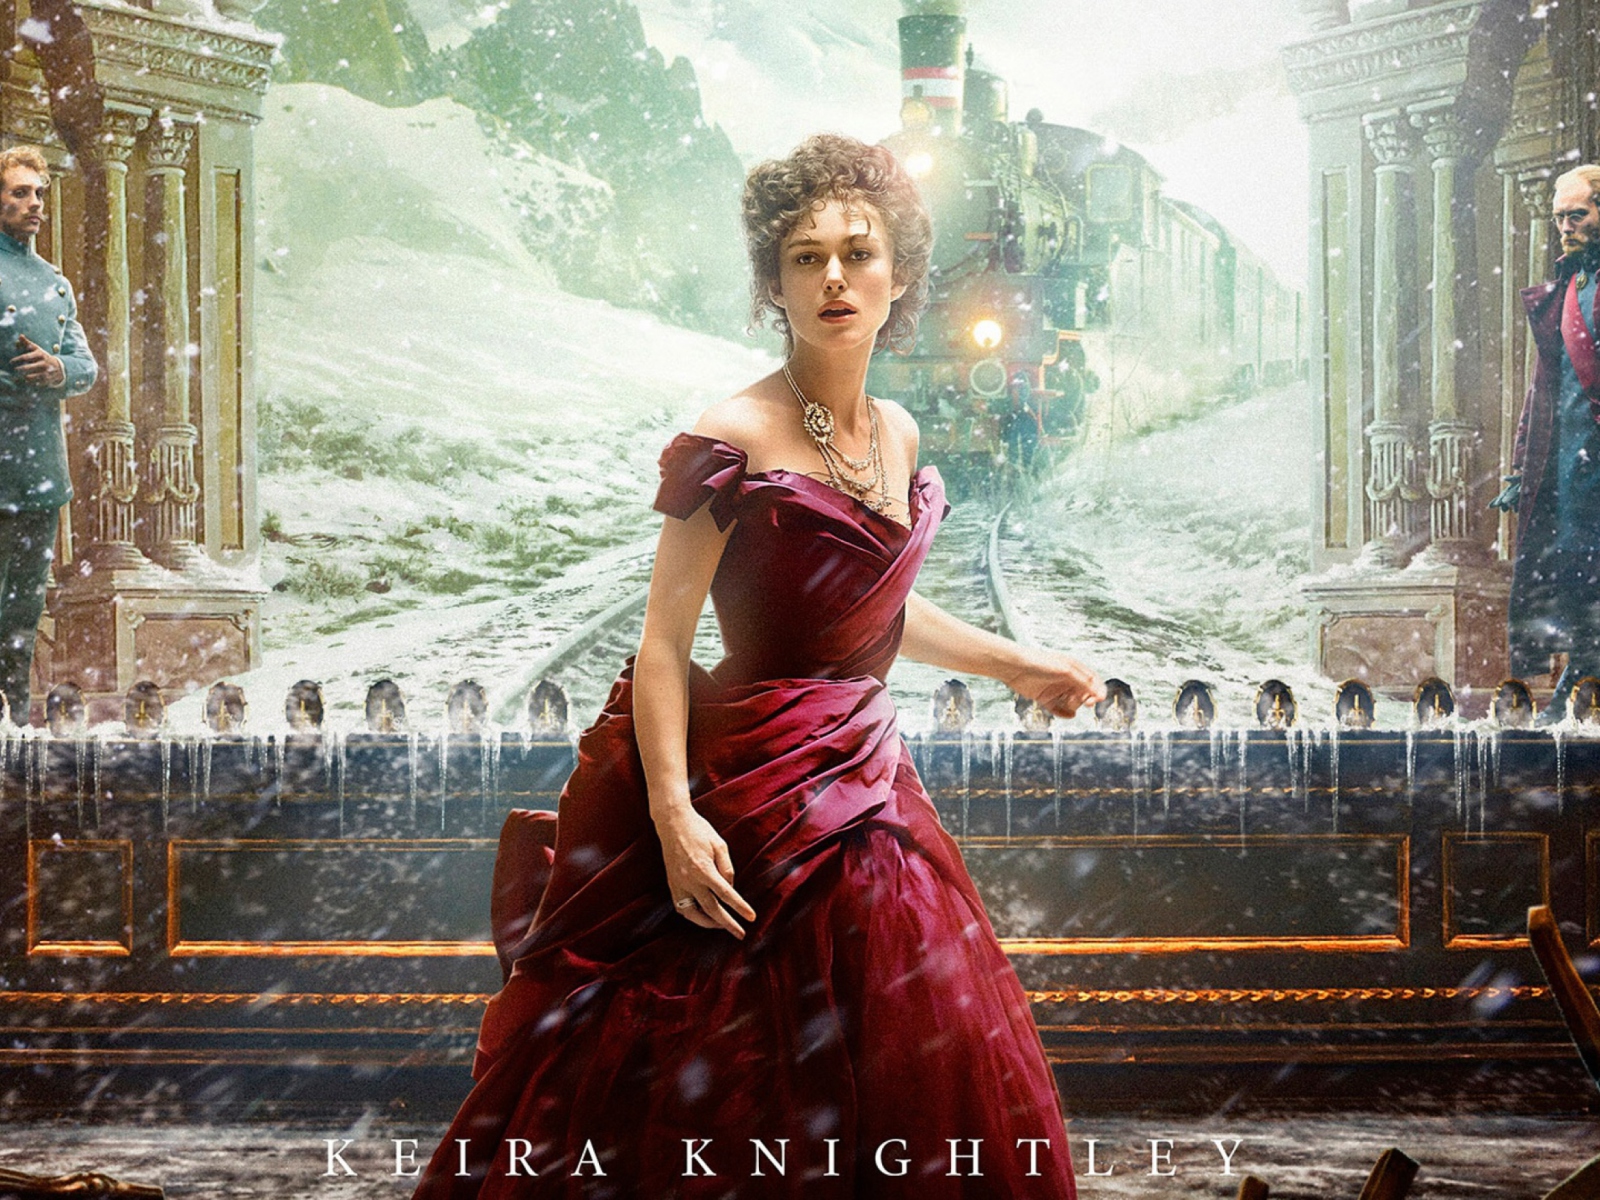 Keira Knightley As Anna Karenina wallpaper 1600x1200